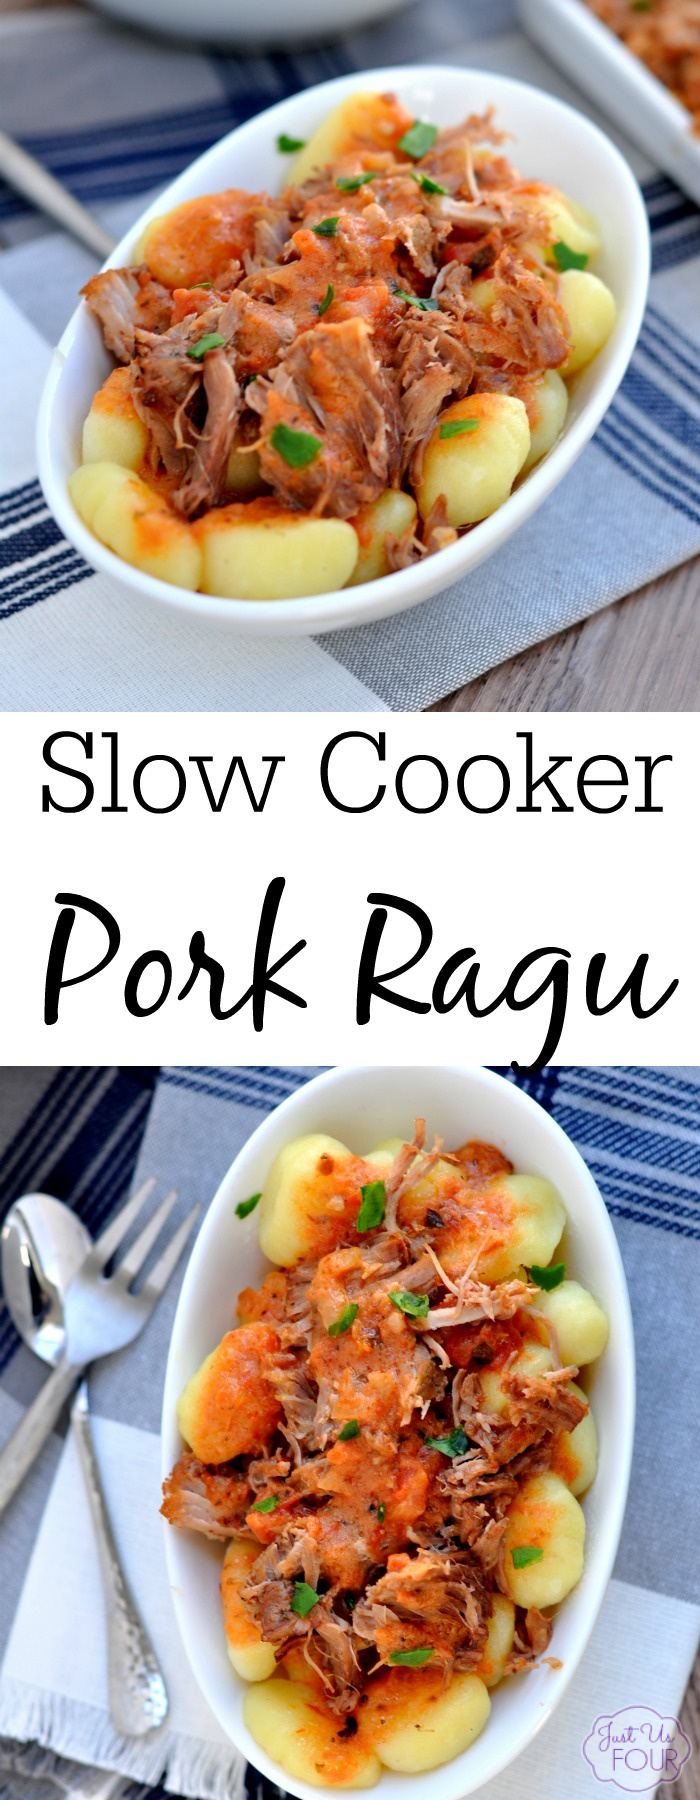 Slow Cooker Pork Ragu Recipe